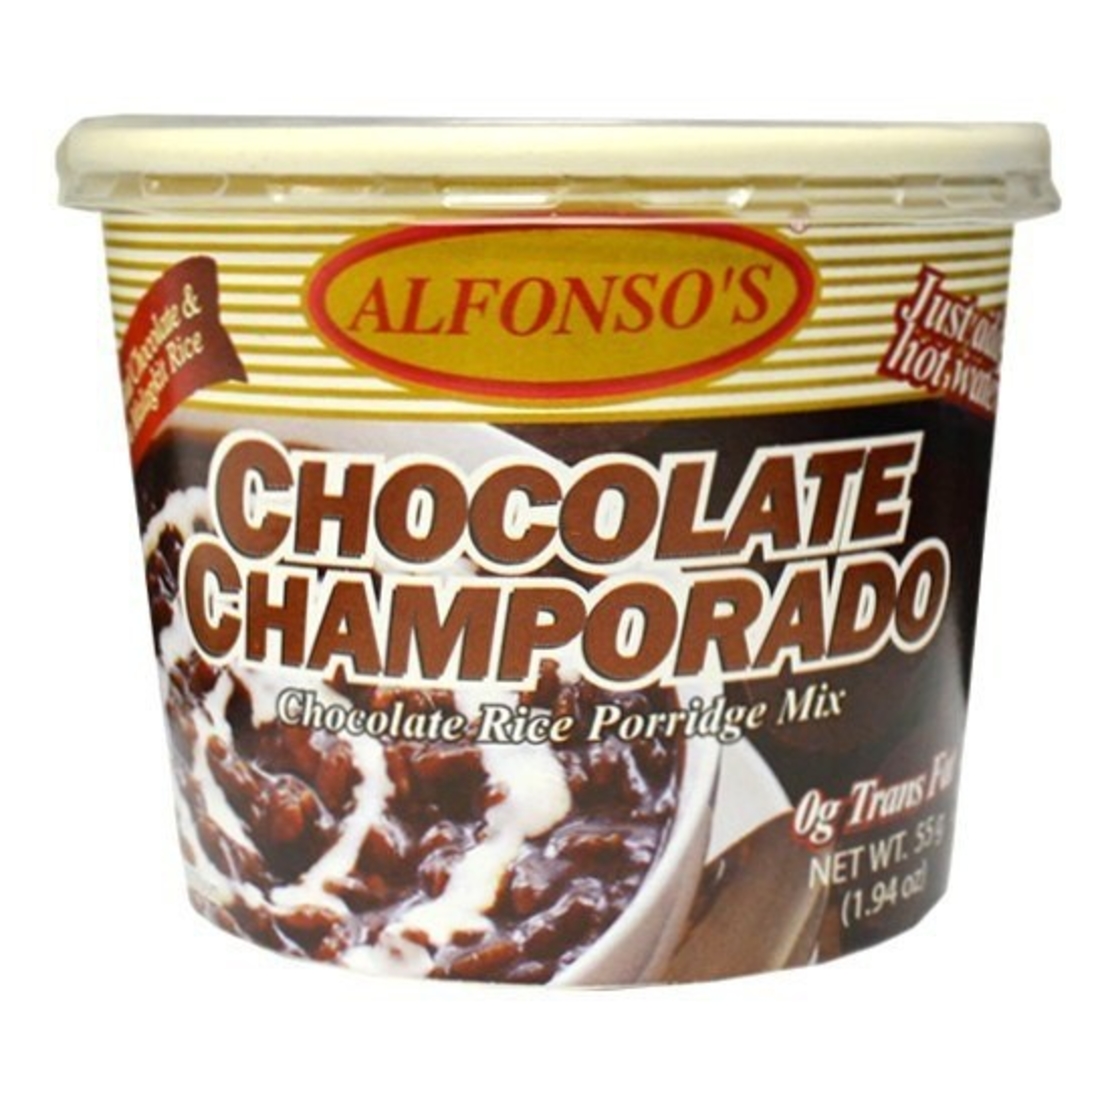 Alfonso's - Chocolate Champorado